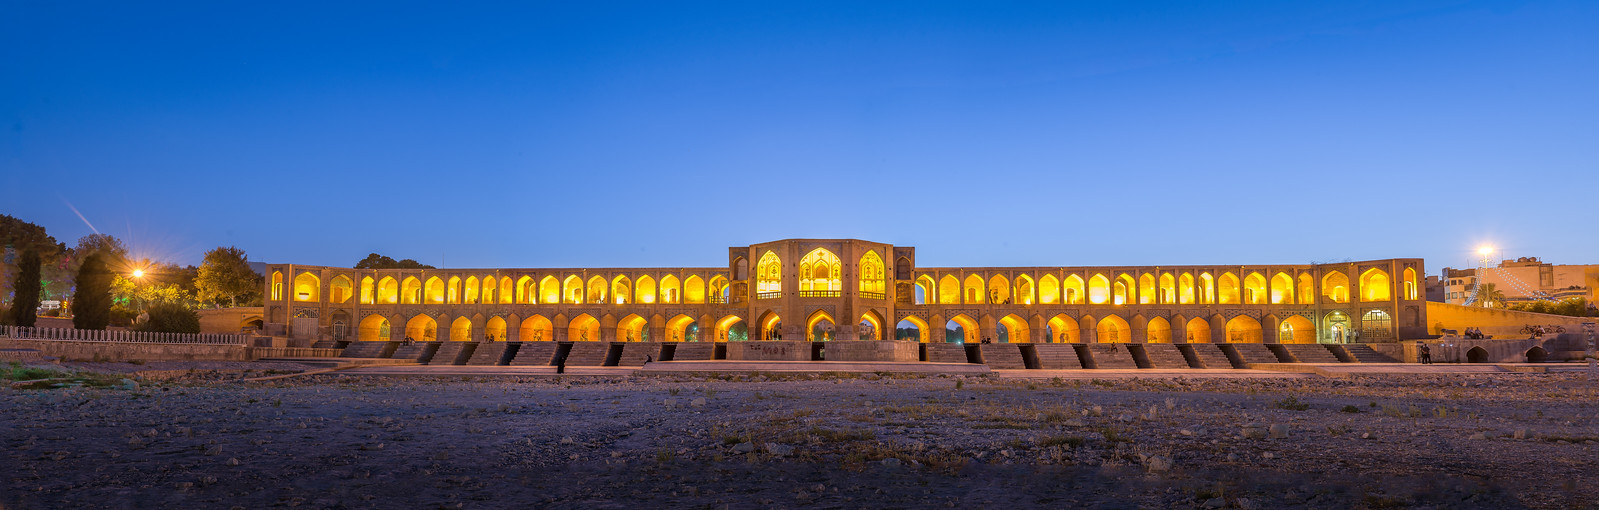 Isfahan - Iran - Isfahan bridges - vipemo handicrafts